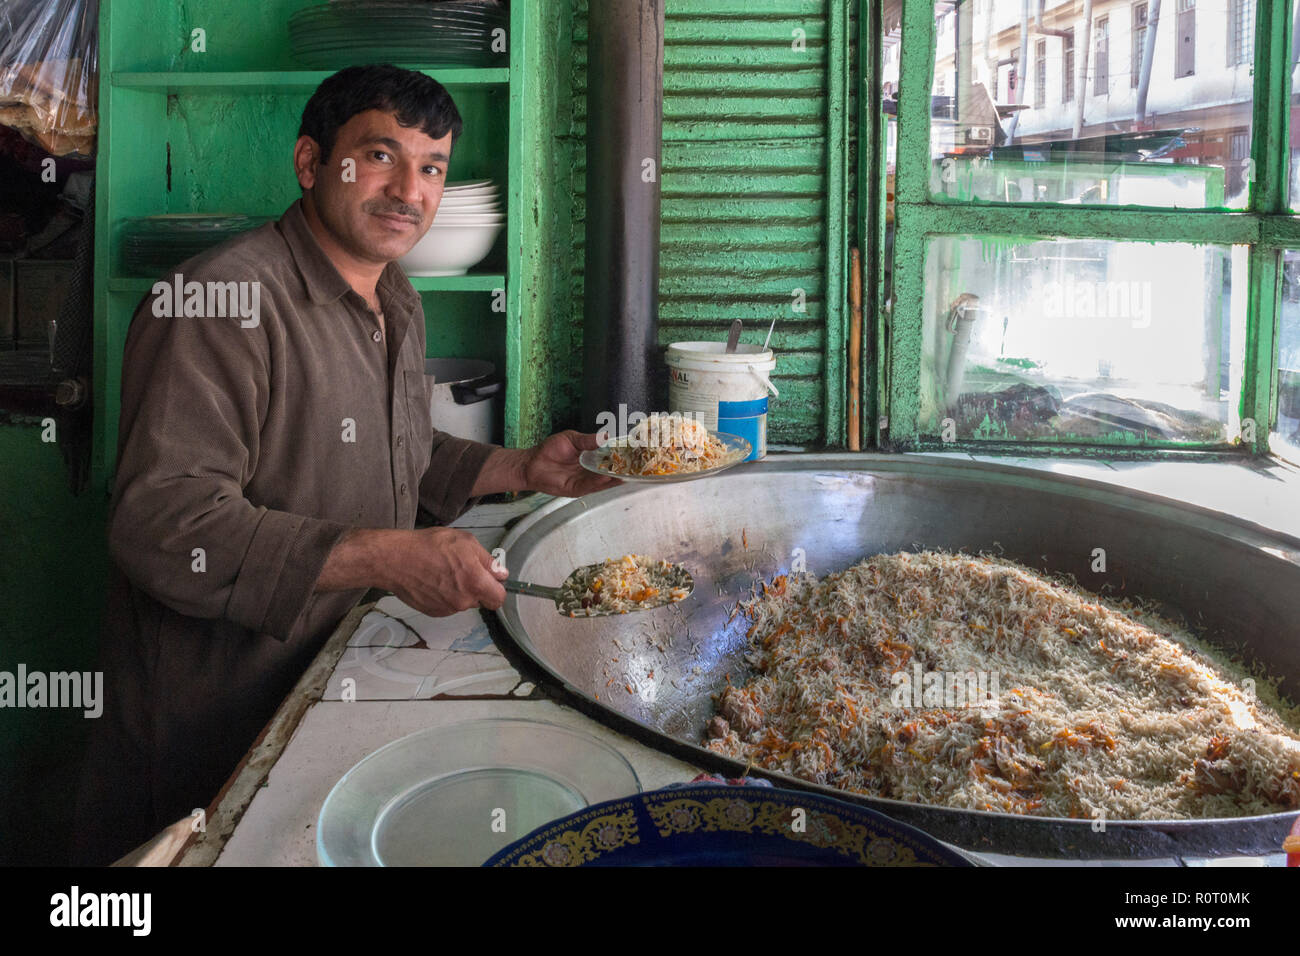 Man Preparing Delicious Biryani In Front Of Green Shutters At The Mazar-e Sharif Central Bazaar, Maraz-e Sharif, Balkh Province, Afghanistan Stock Photo